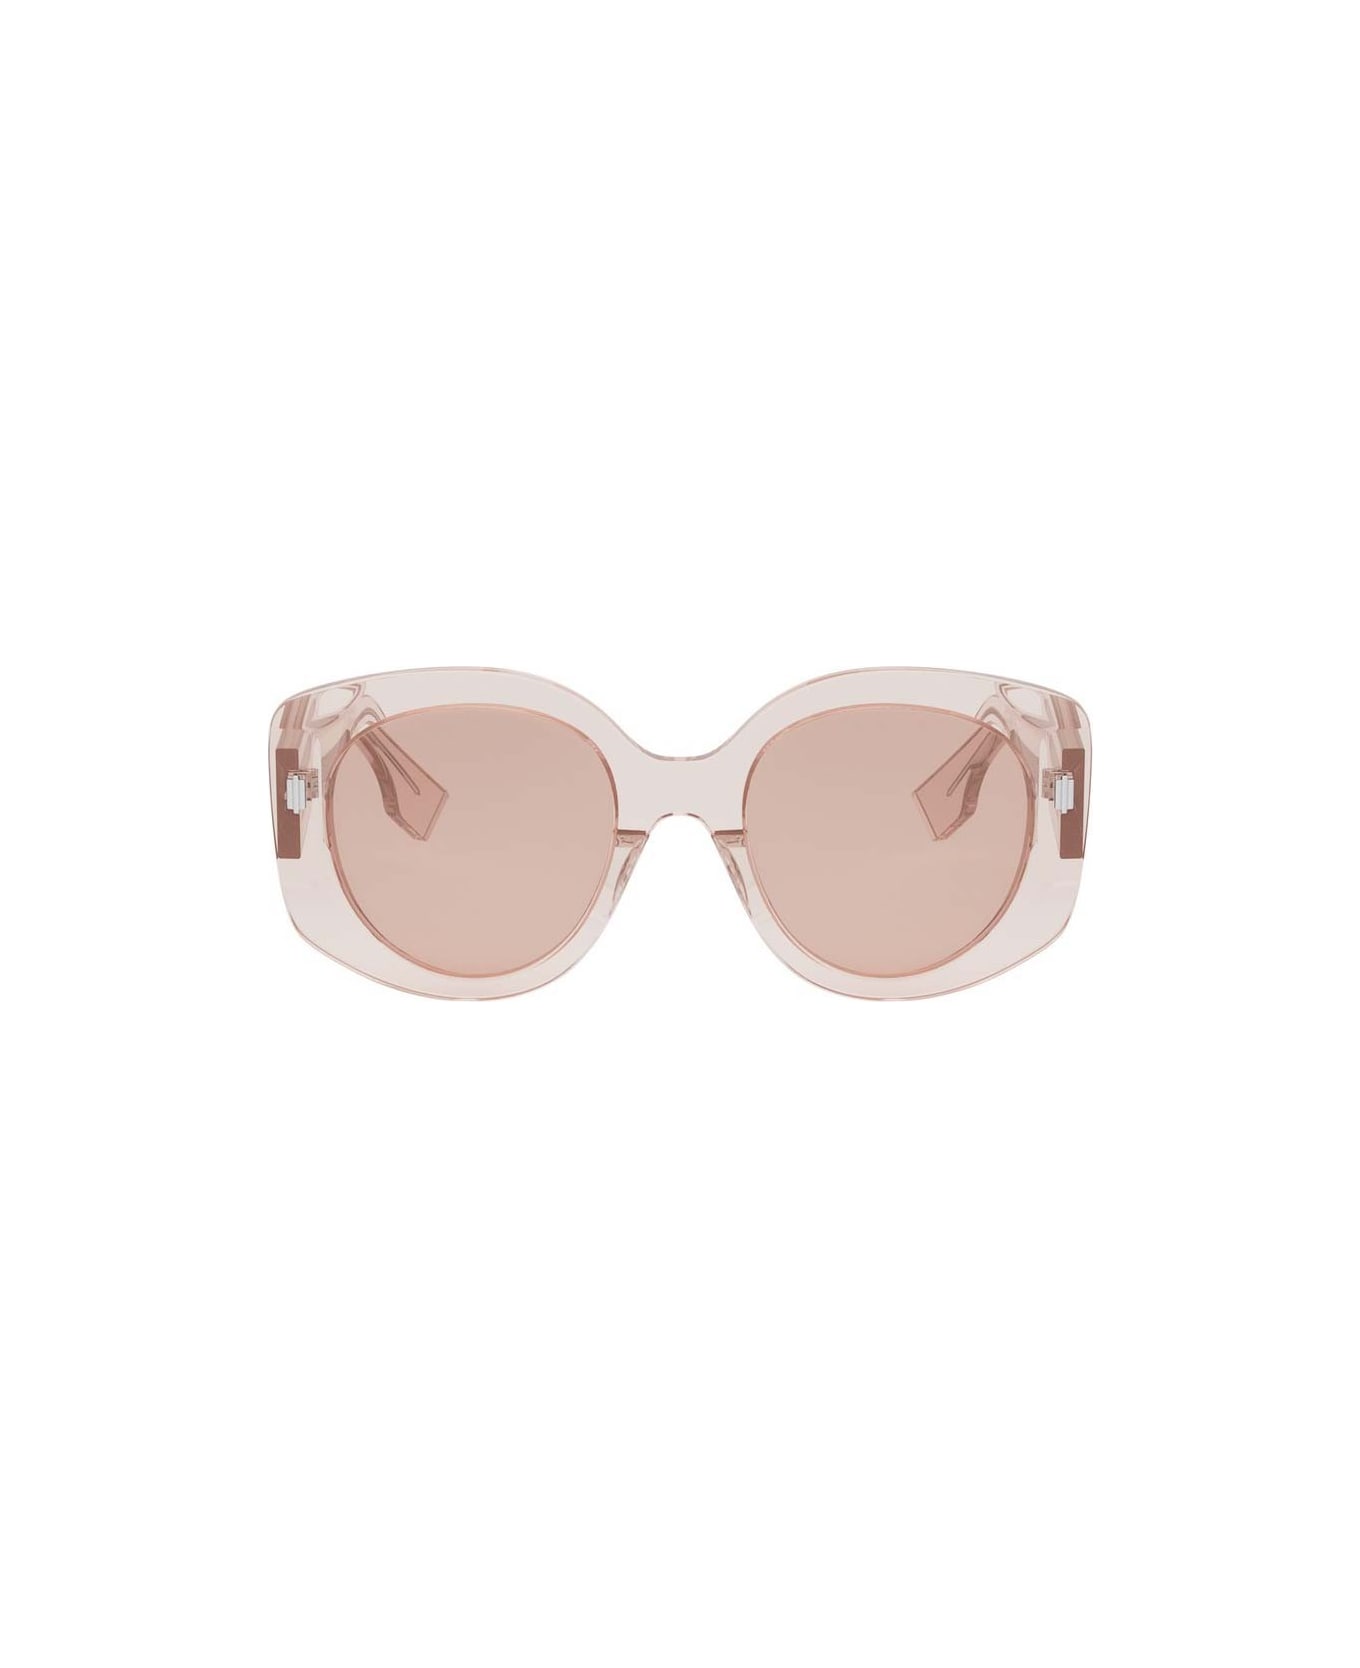 Fendi Eyewear Sunglasses - Rosa trasparente/Rosa